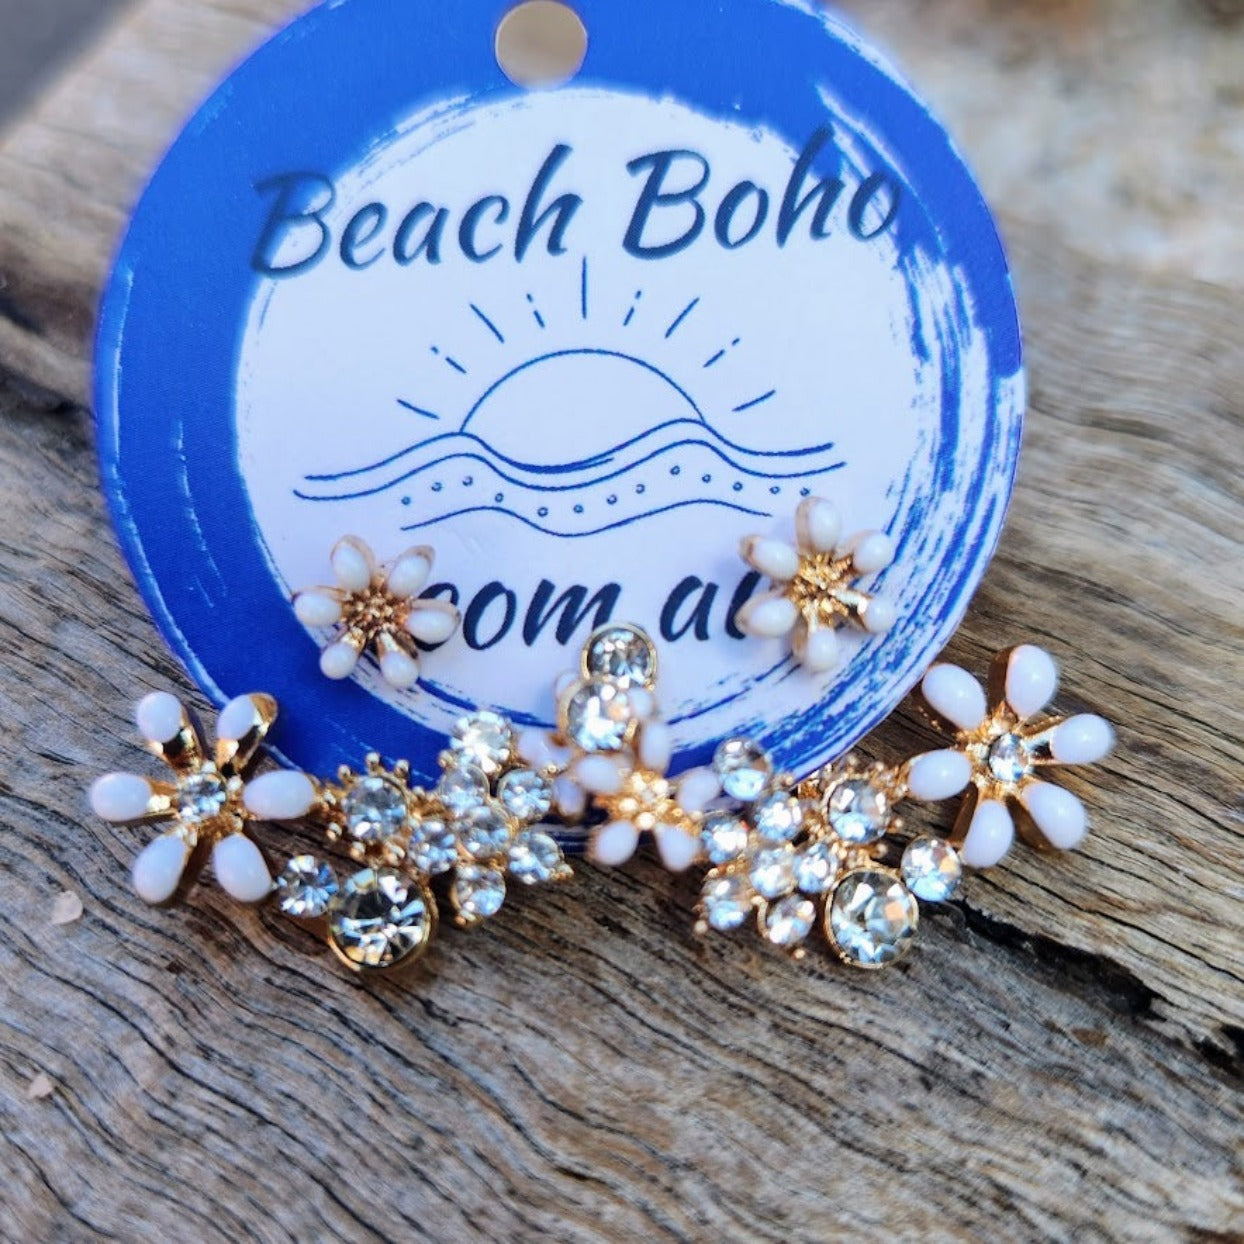 WHITE DAISIES - BACK STUD GOLD PLATED EARRINGS - Premium earrings from www.beachboho.com.au - Just $35! Shop now at www.beachboho.com.au